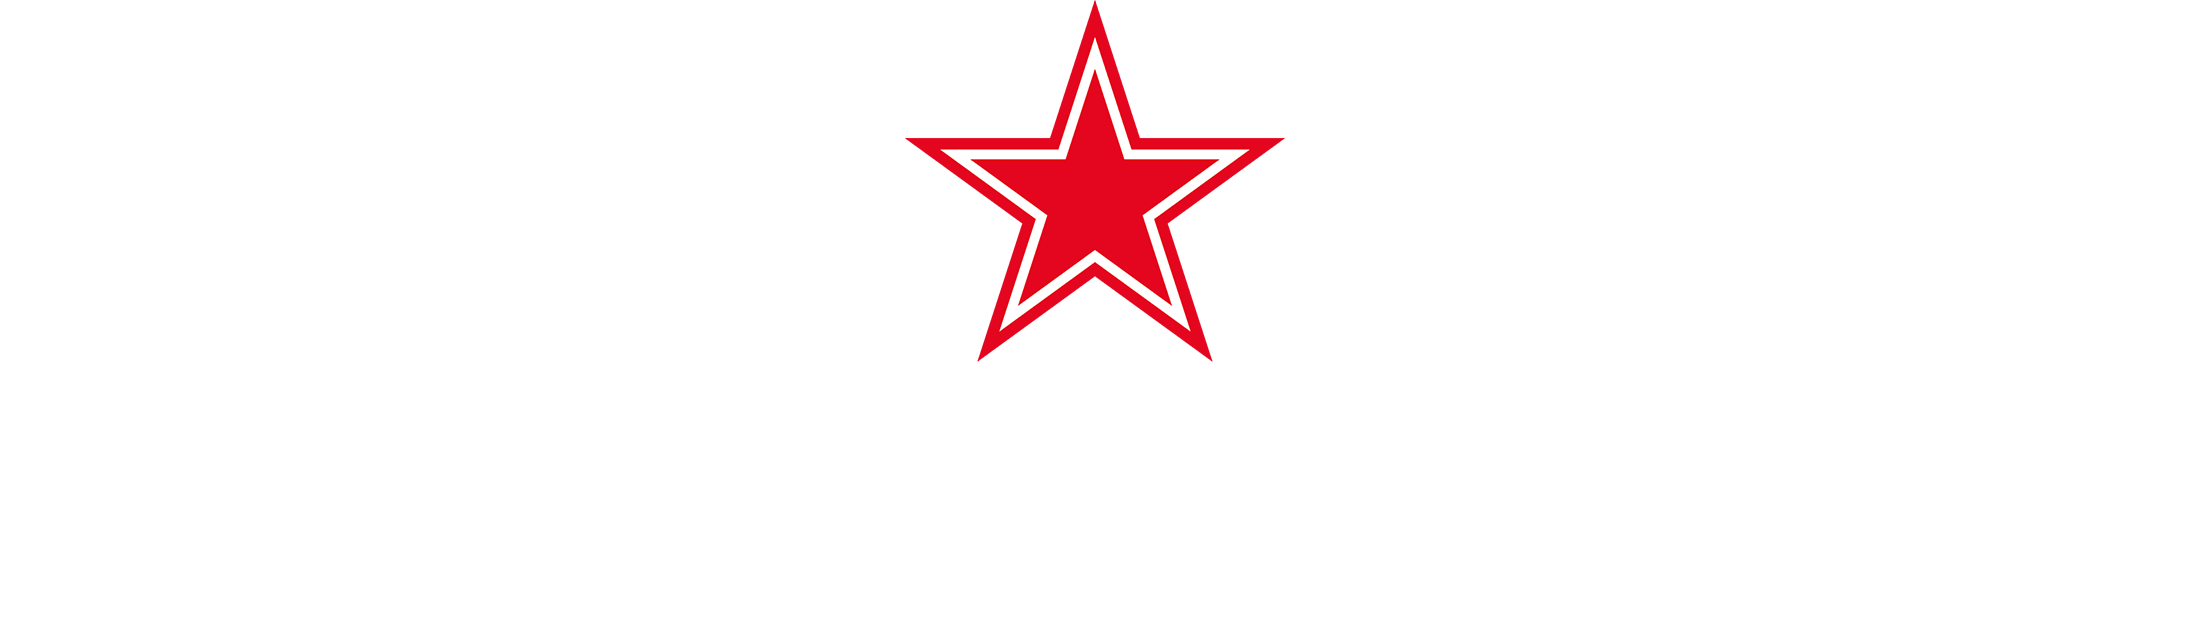 Pellegrino Logo